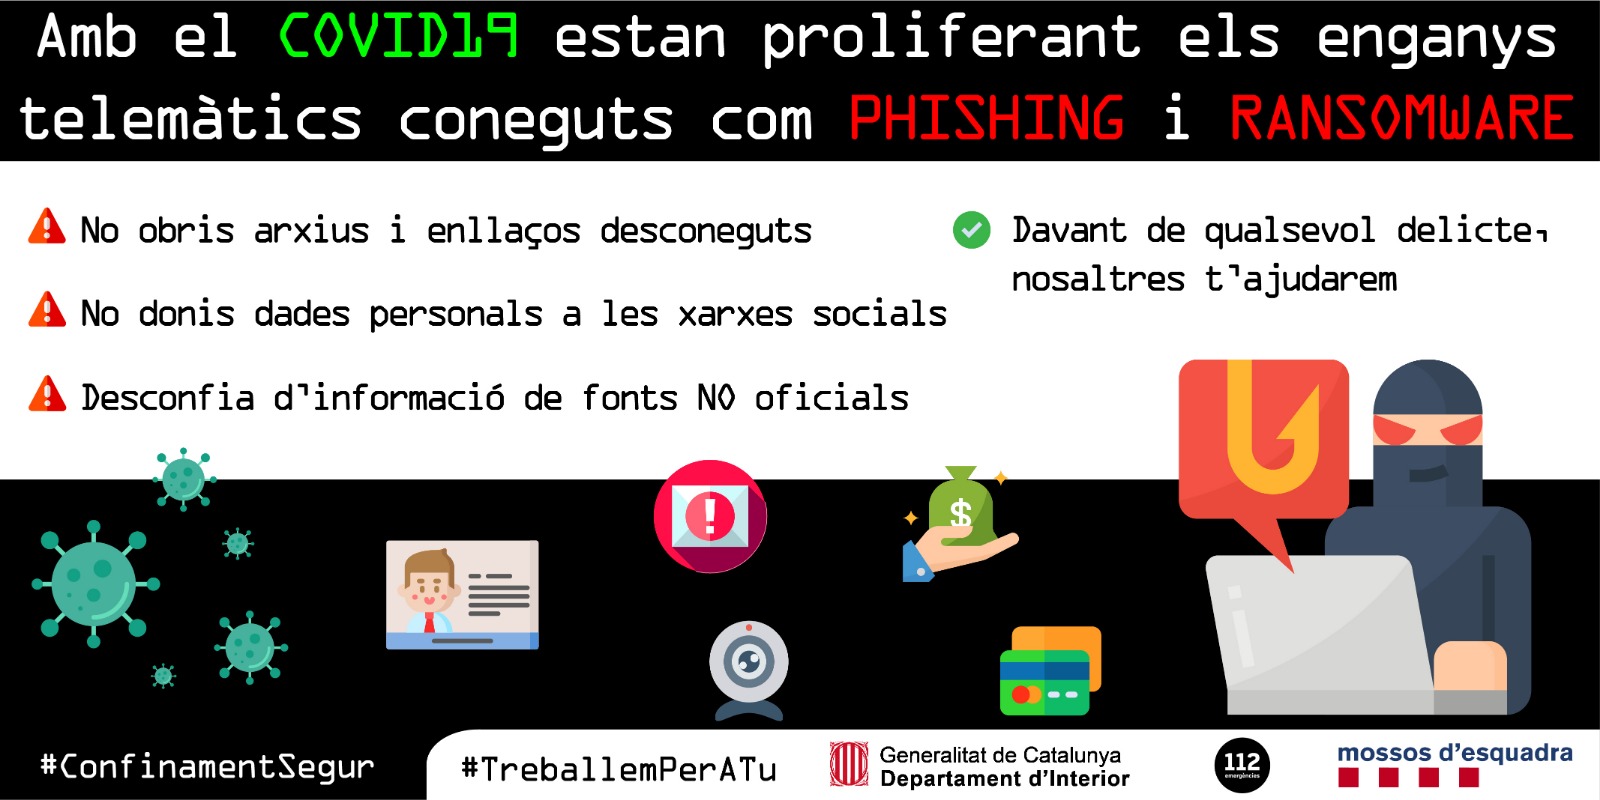 Phishing i Ransomware